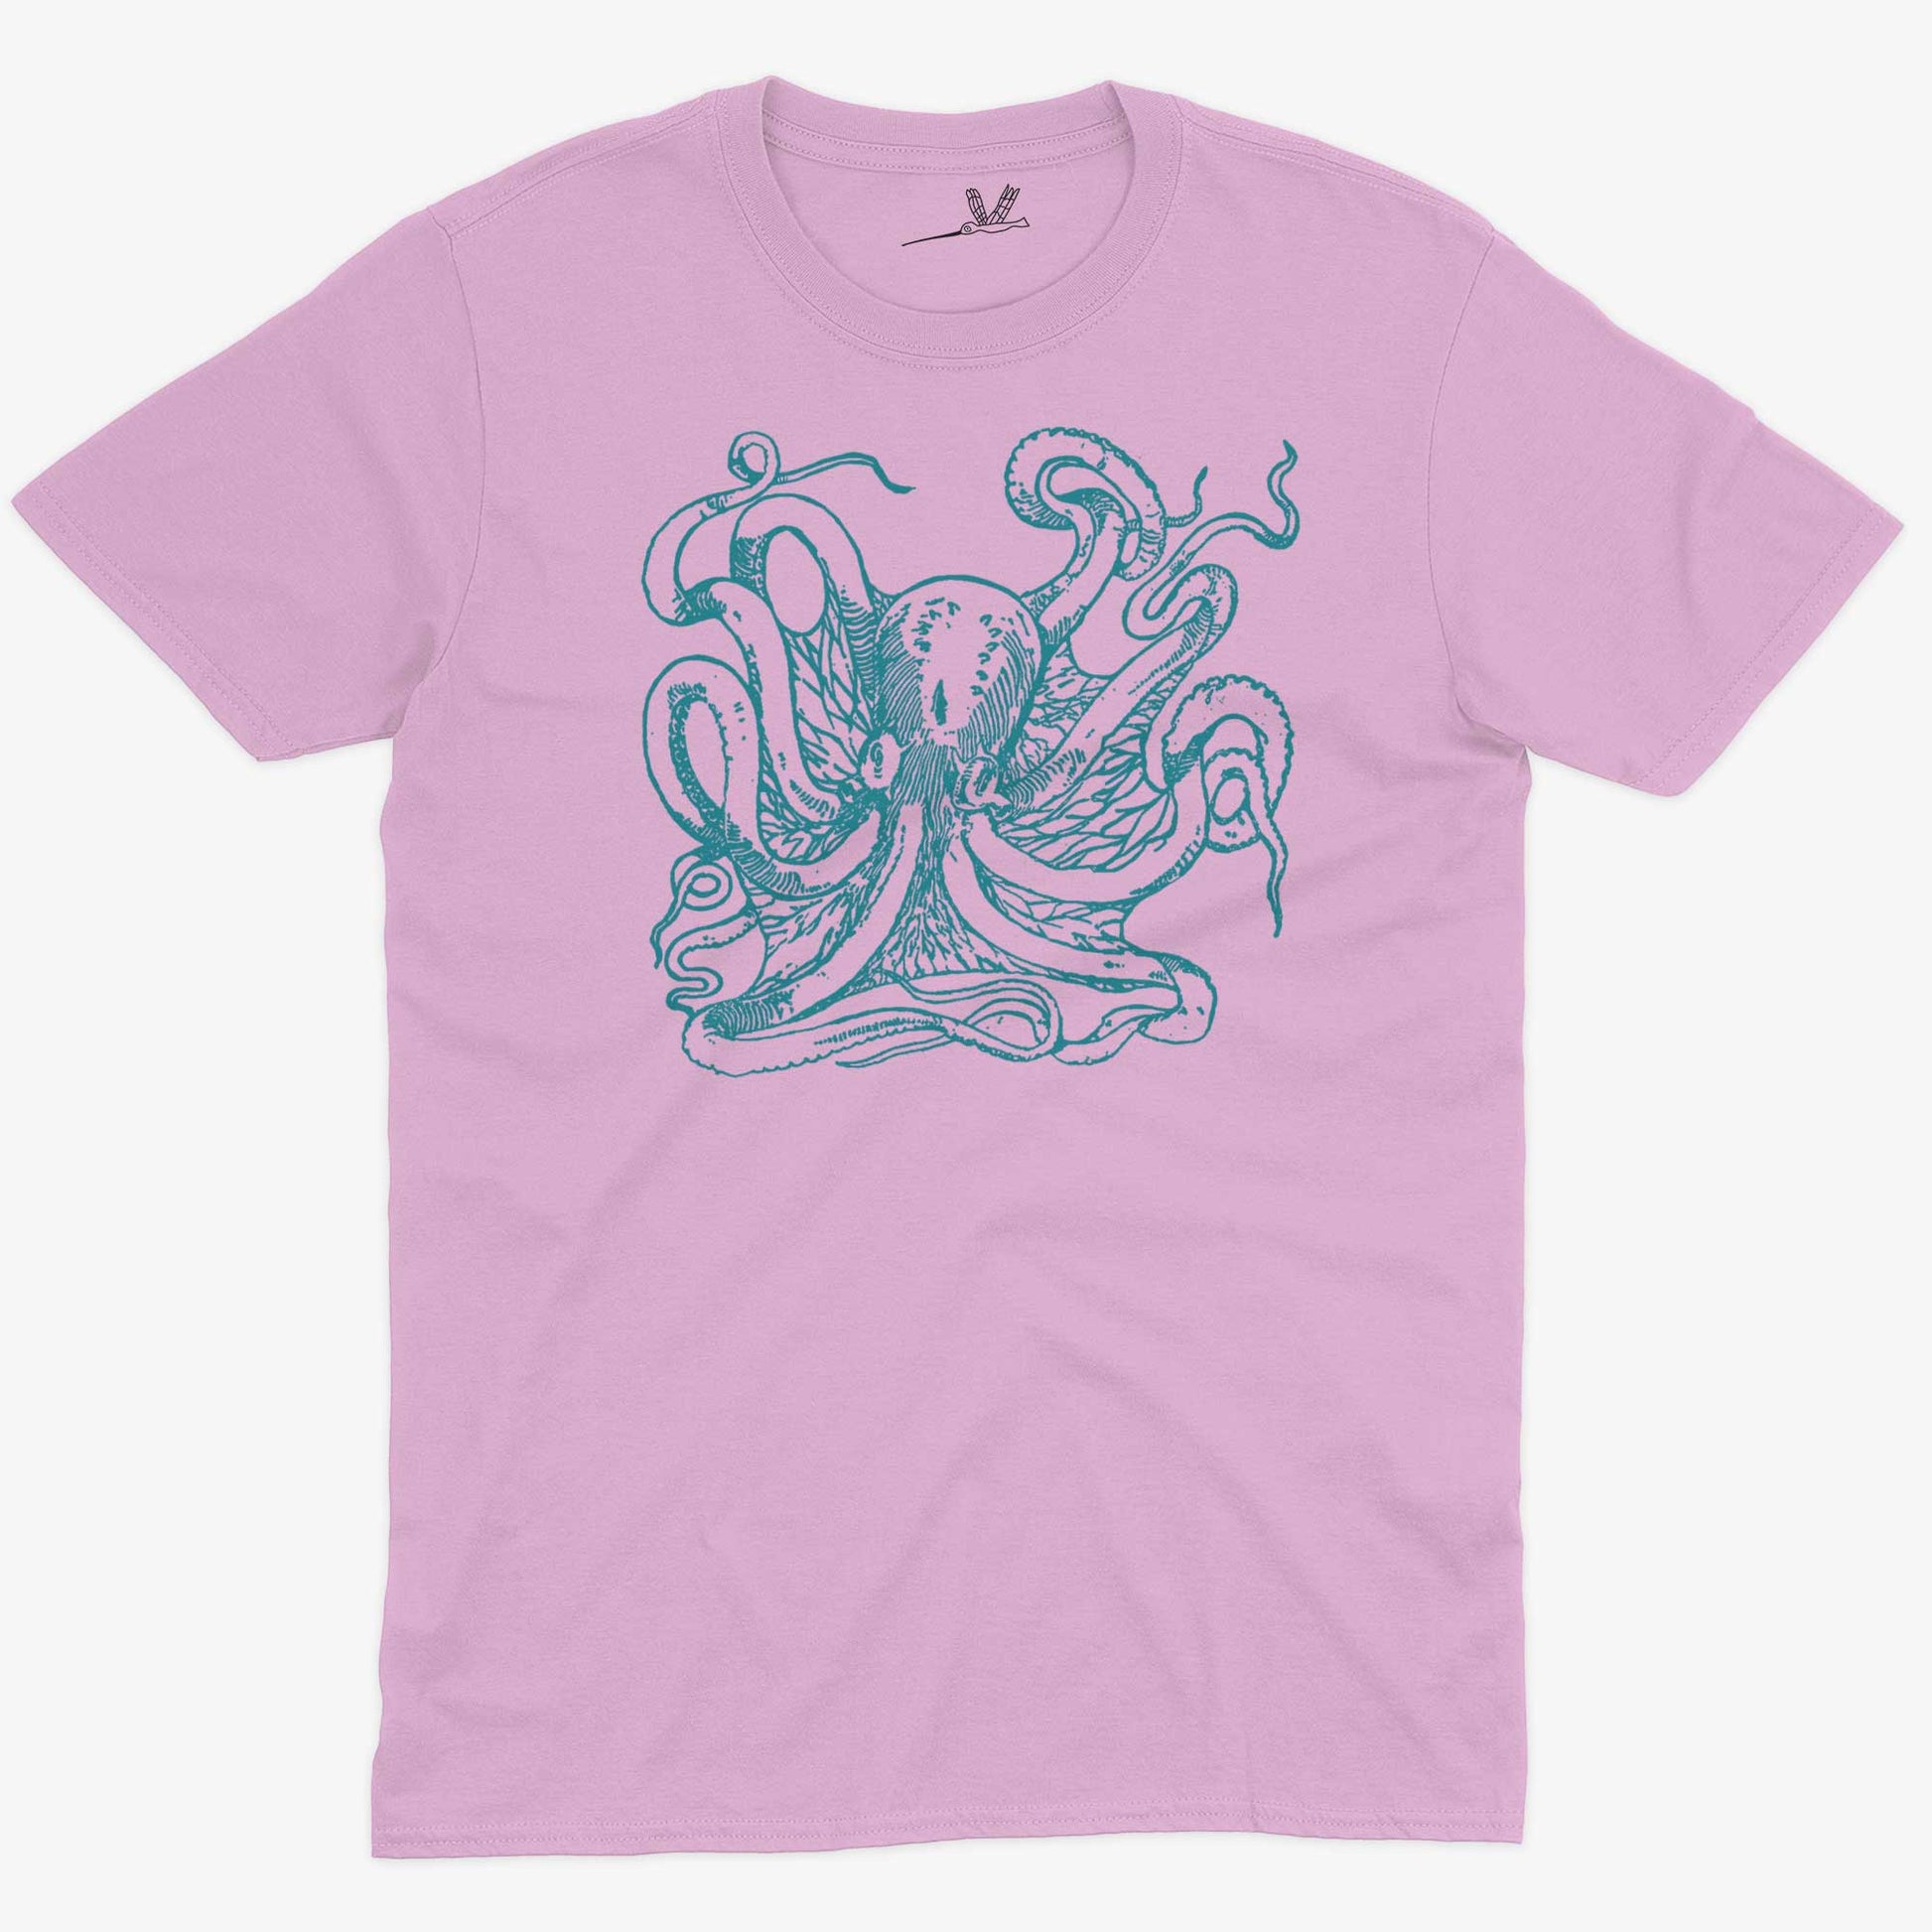 Giant Octopus Unisex Or Women's Cotton T-shirt-Pink-Unisex